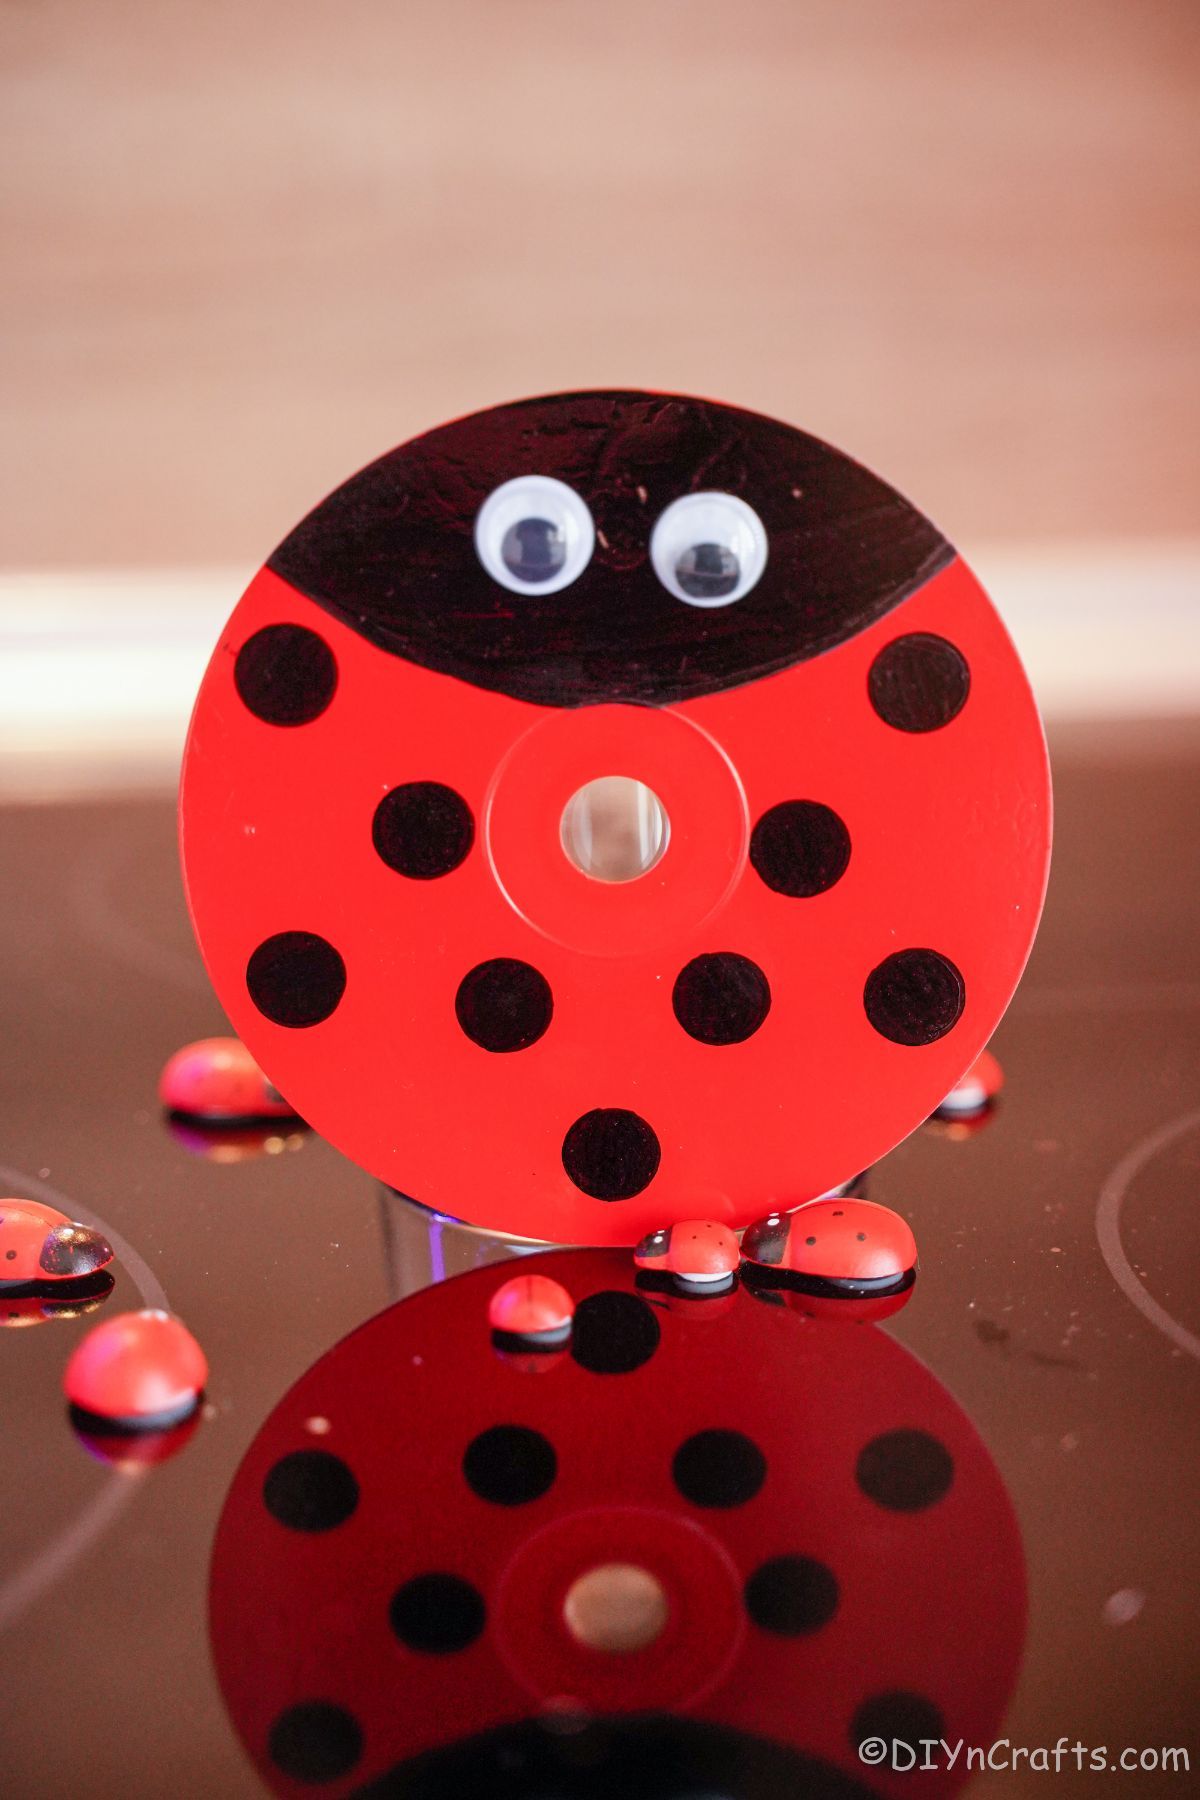 ladybug cd standing on end by mini ladybug rocks on black table